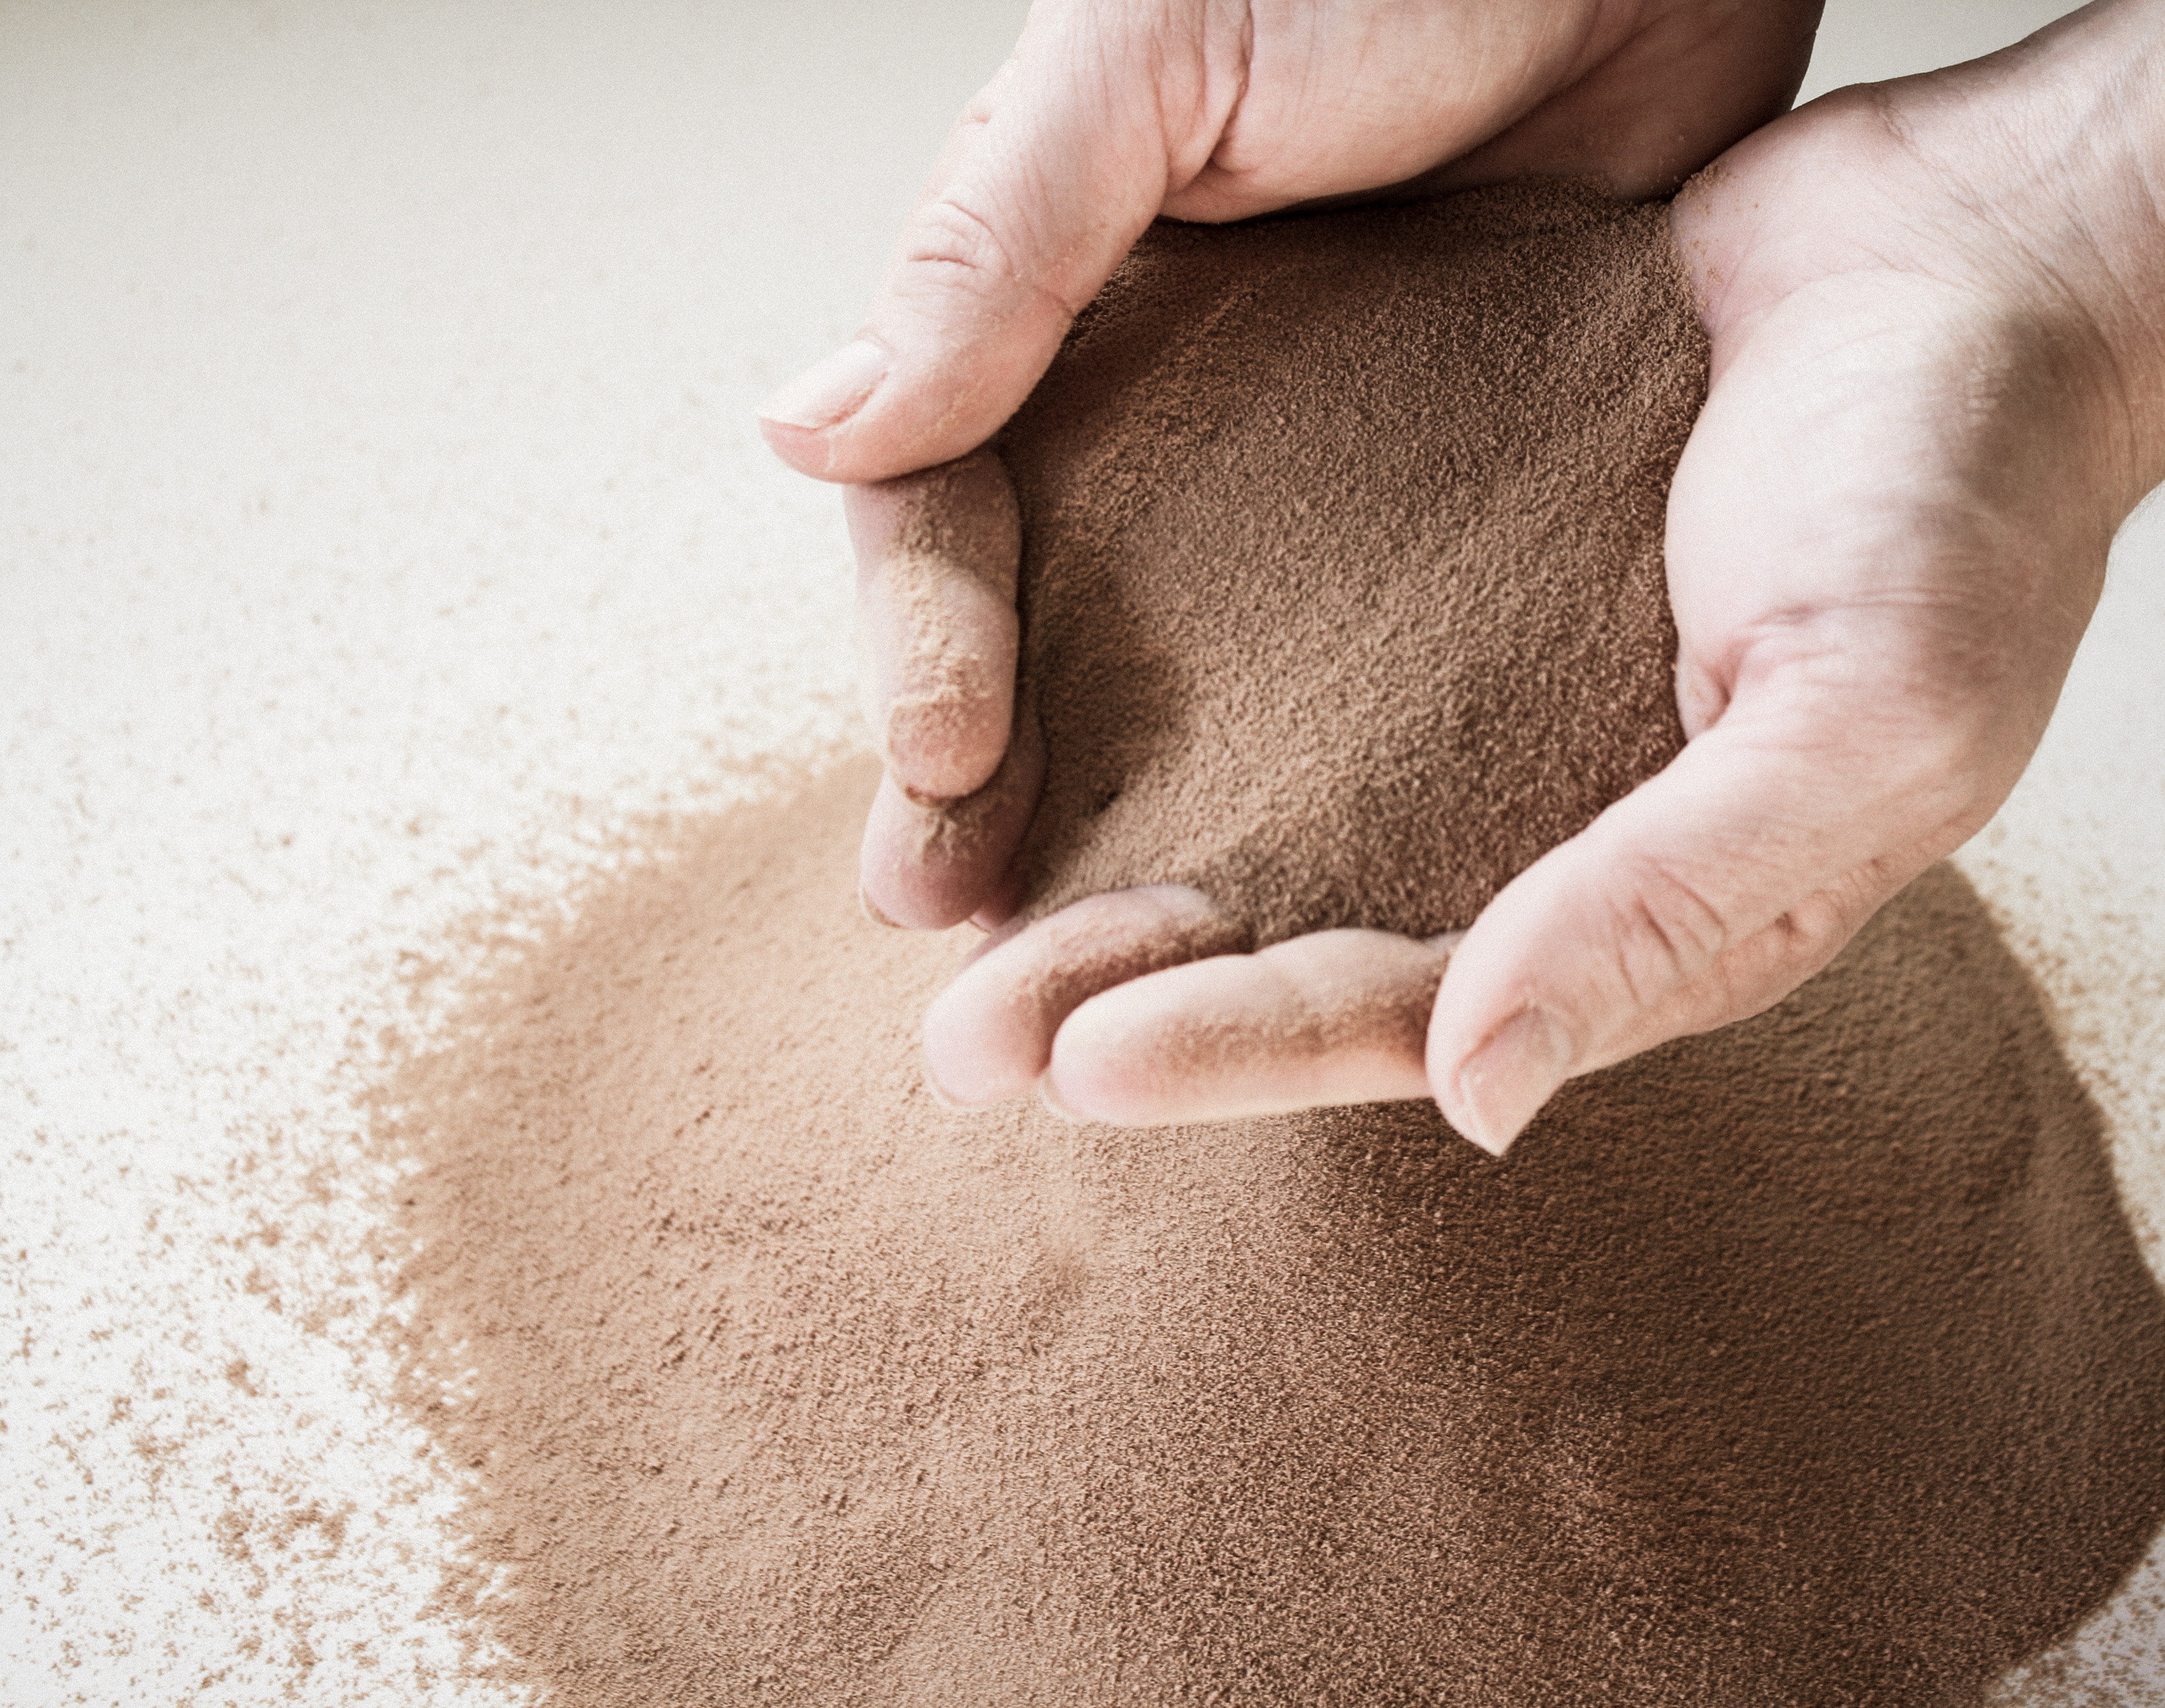 hands in brown powder